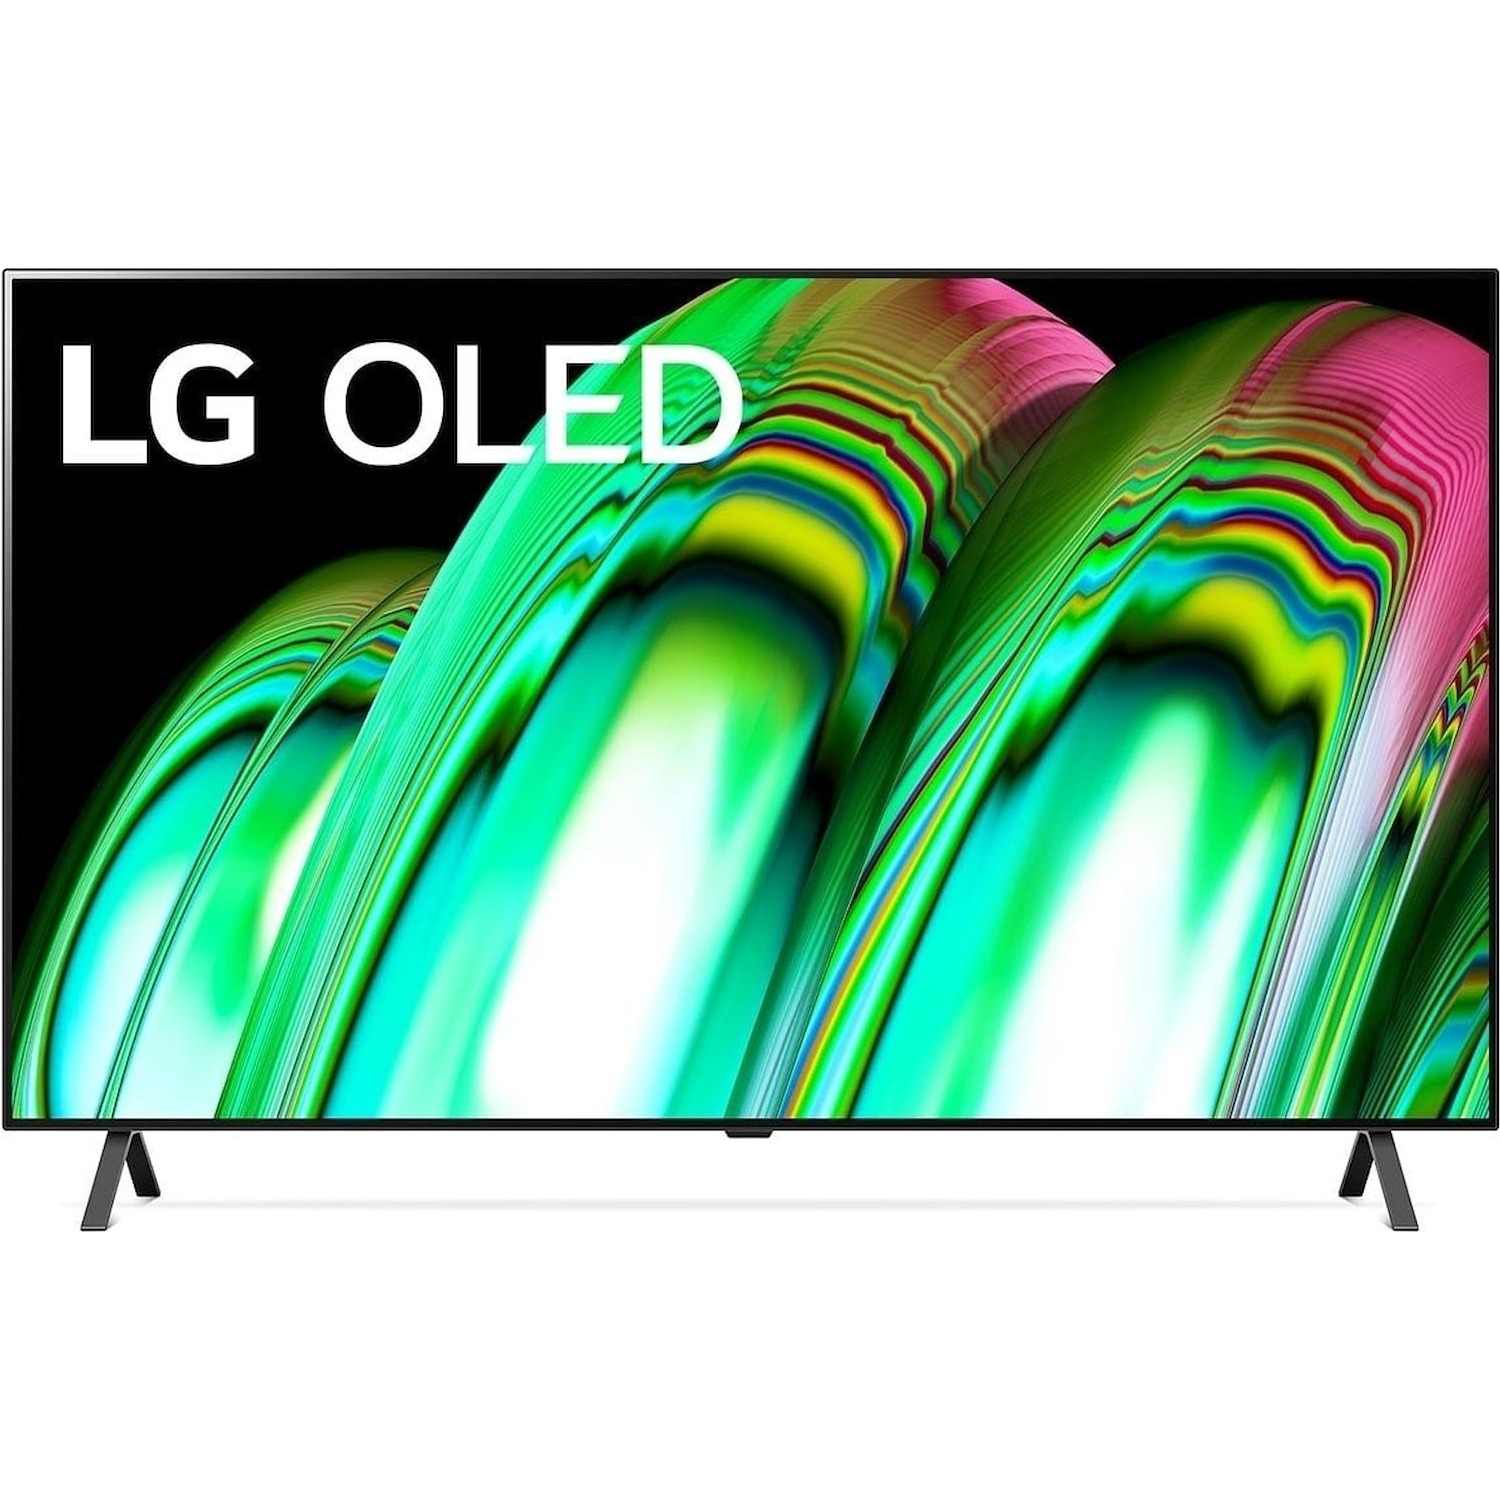 Immagine per TV OLED LG OLED48A29 Calibrato 4K e FULL HD da DIMOStore